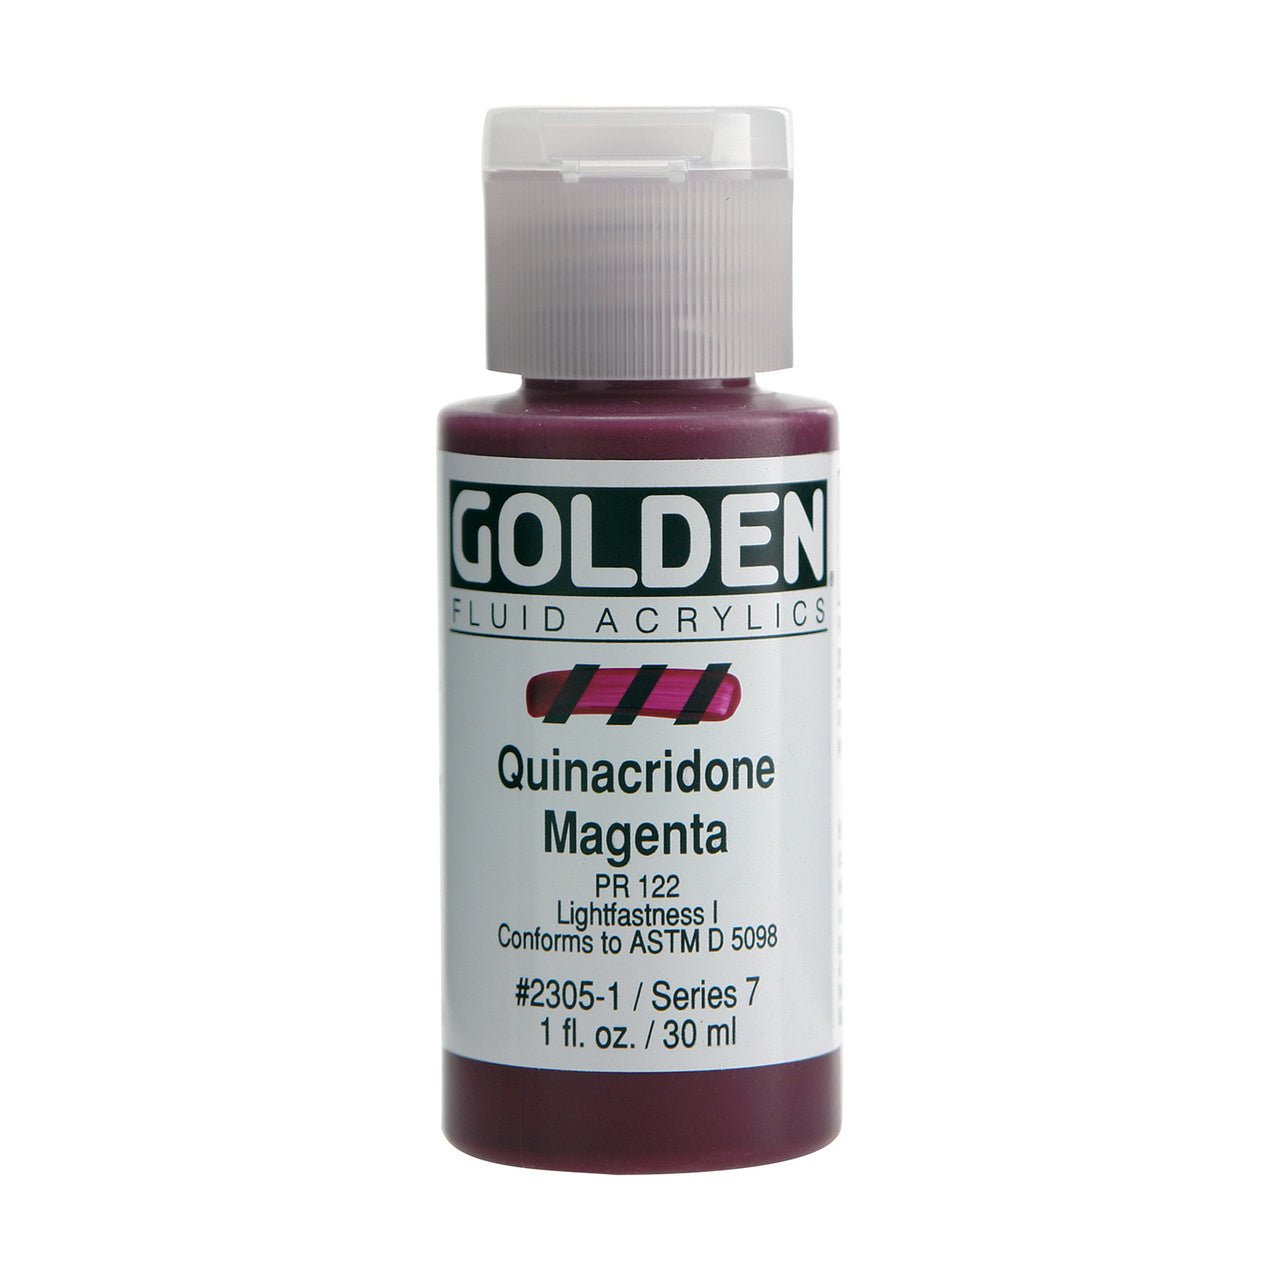 Golden Fluid Acrylic Quinacridone Magenta 1 oz - merriartist.com